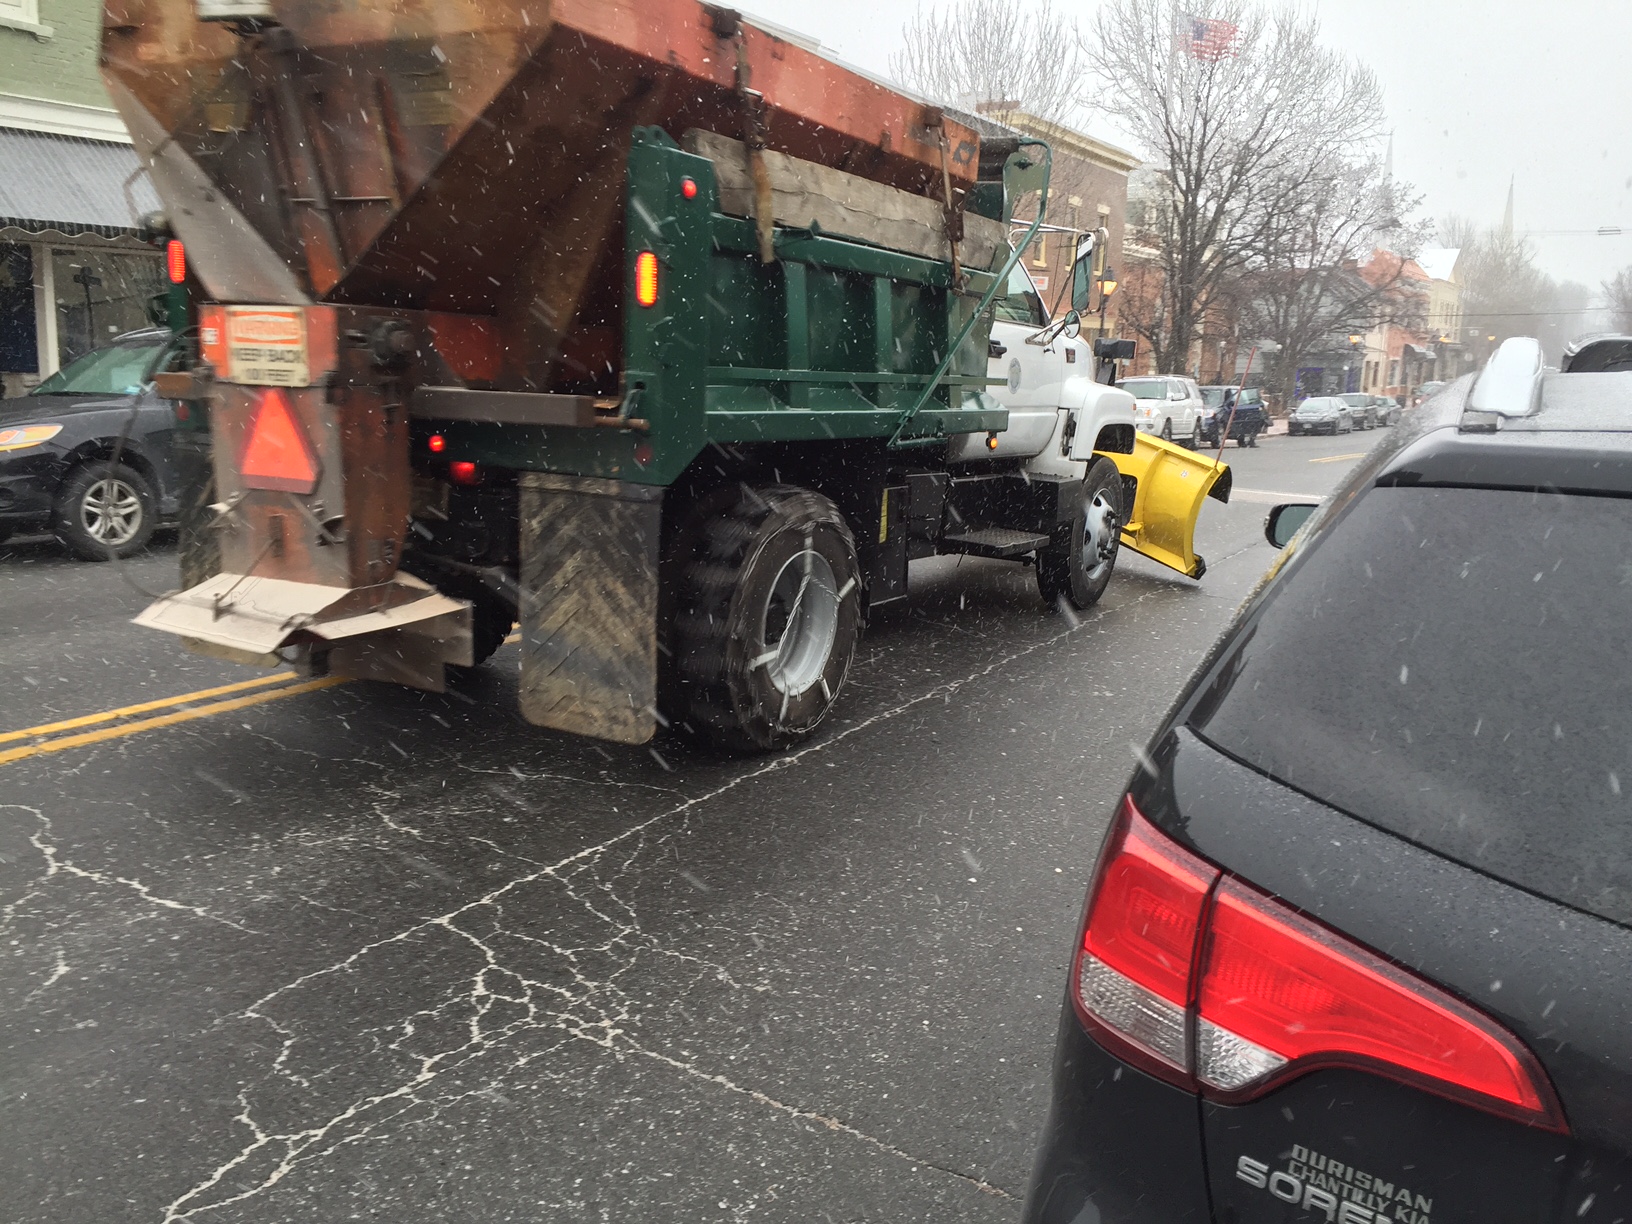 A snow plow heads down the road in Warrenton, Virginia on Friday, Jan. 22. (WTOP/Neal Augenstein)